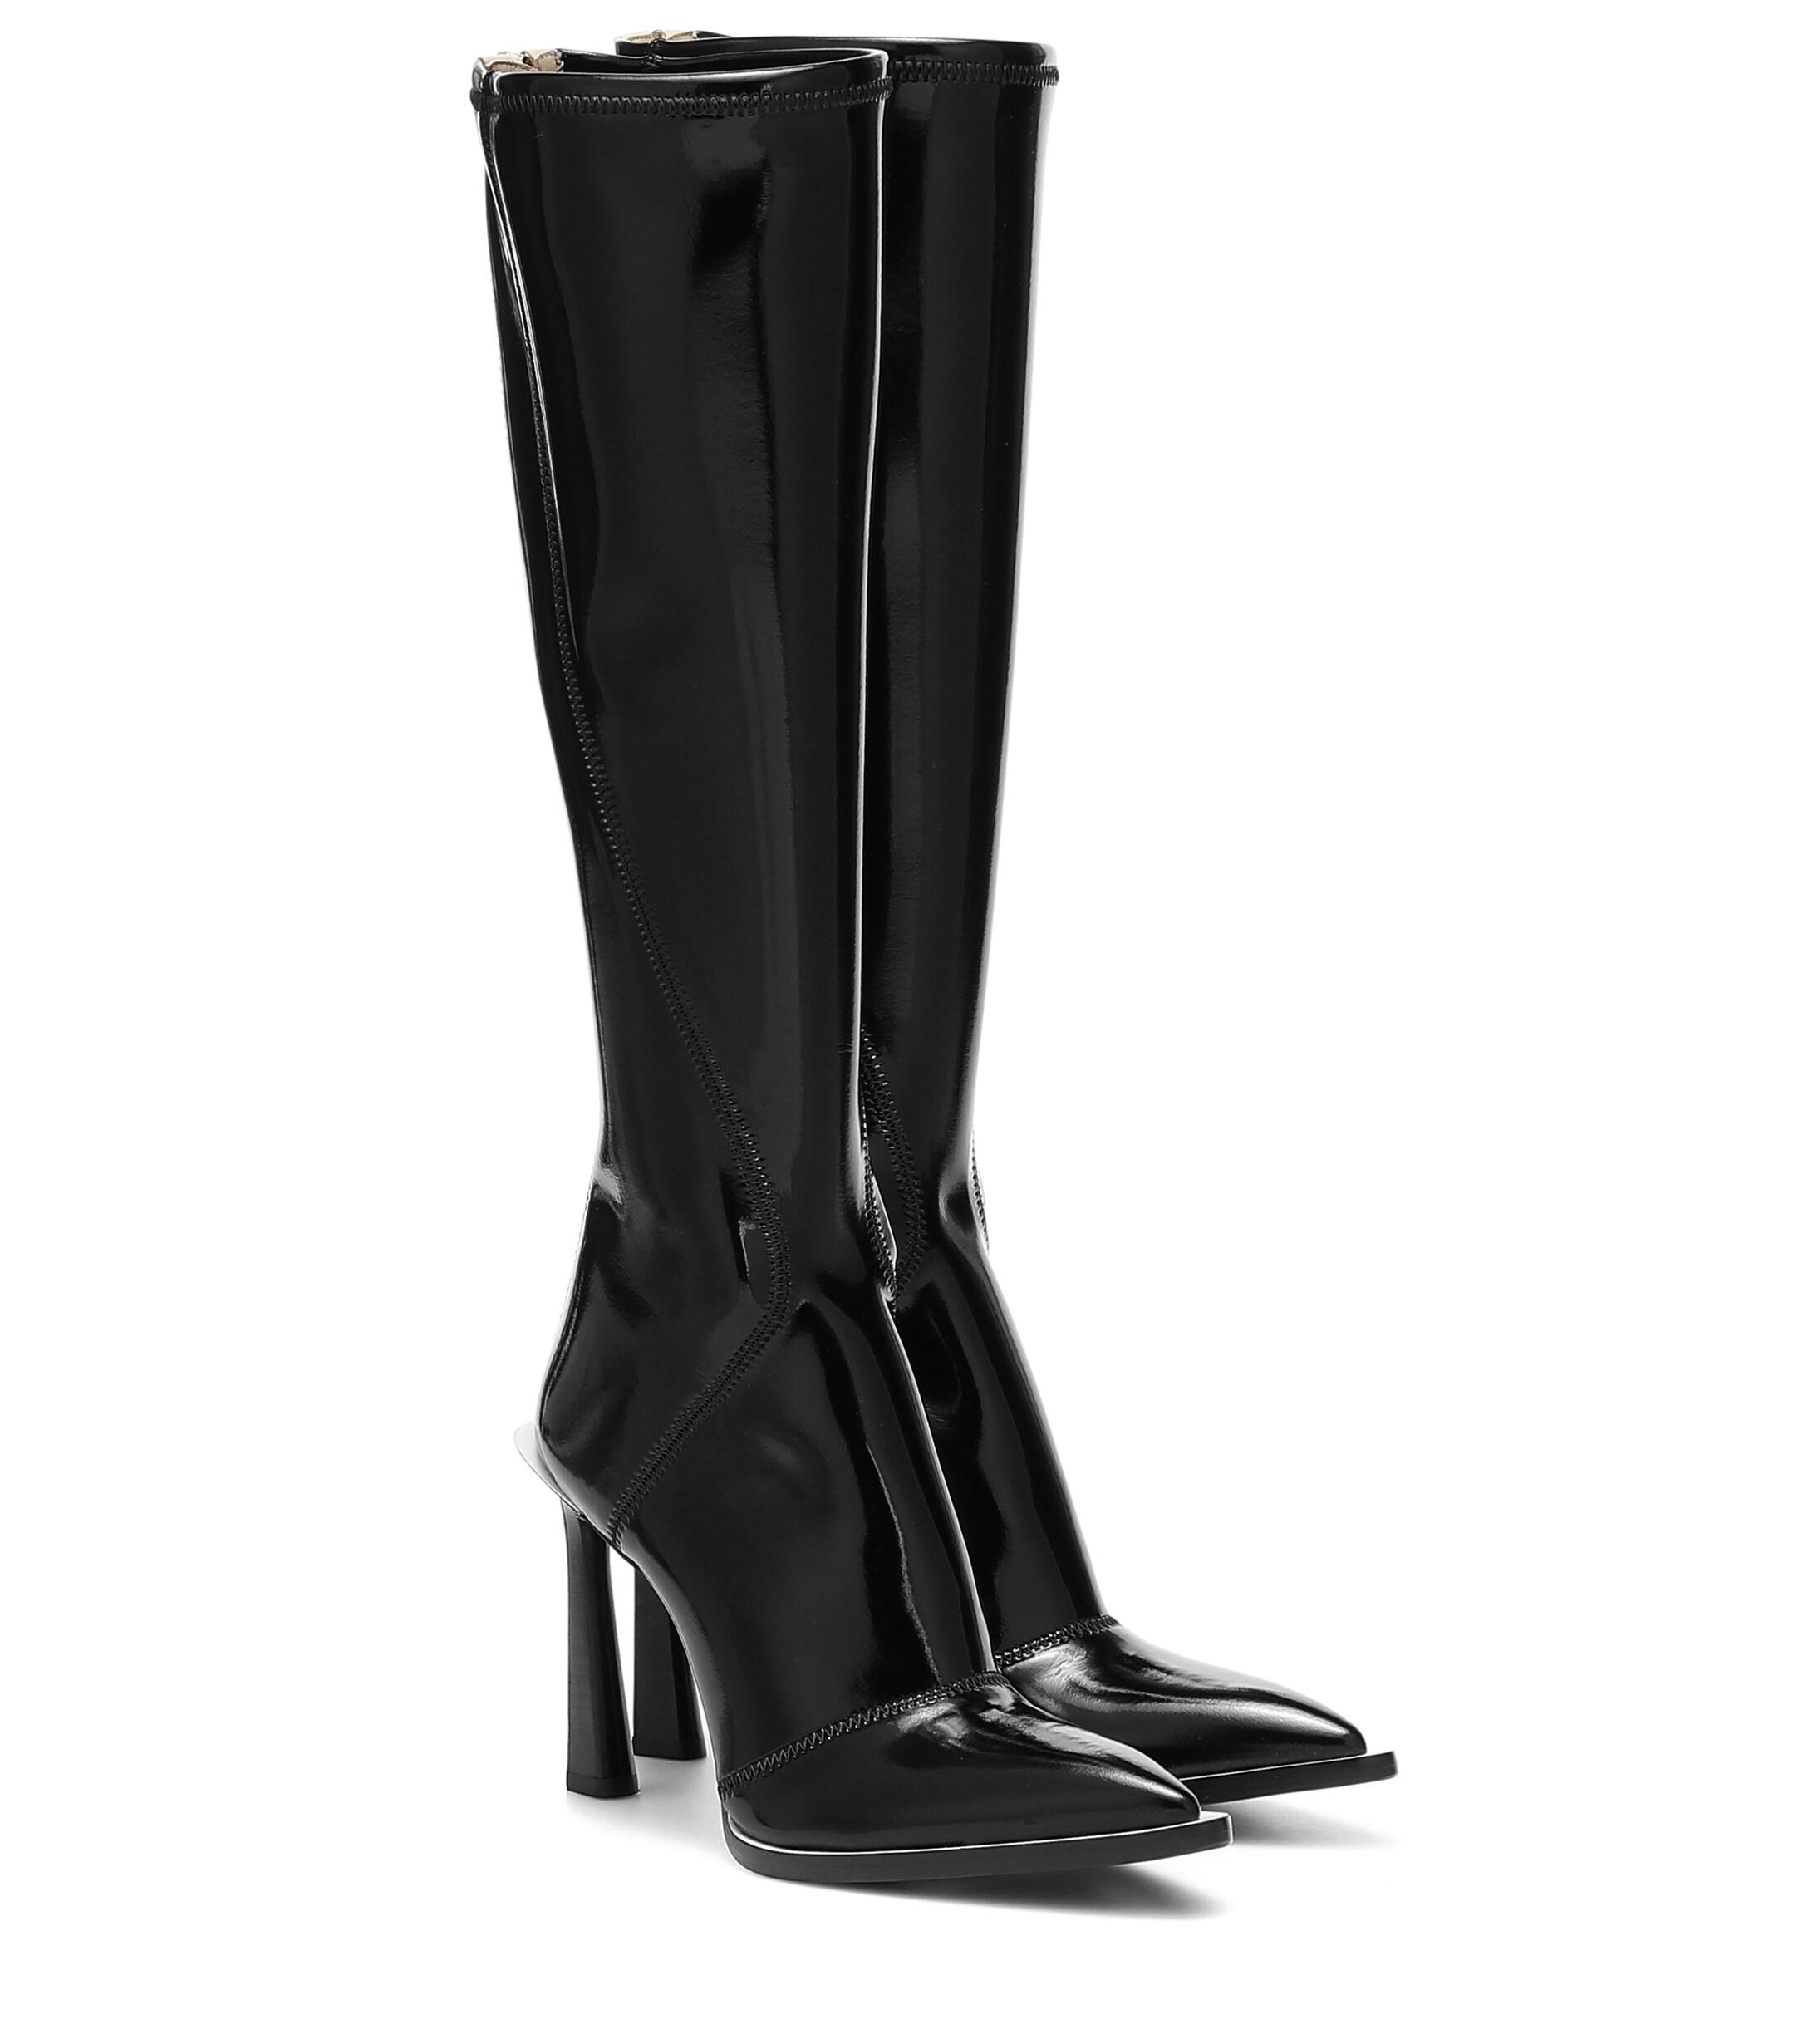 Fendi Fframe Knee-high Neoprene Boots in Black - Lyst